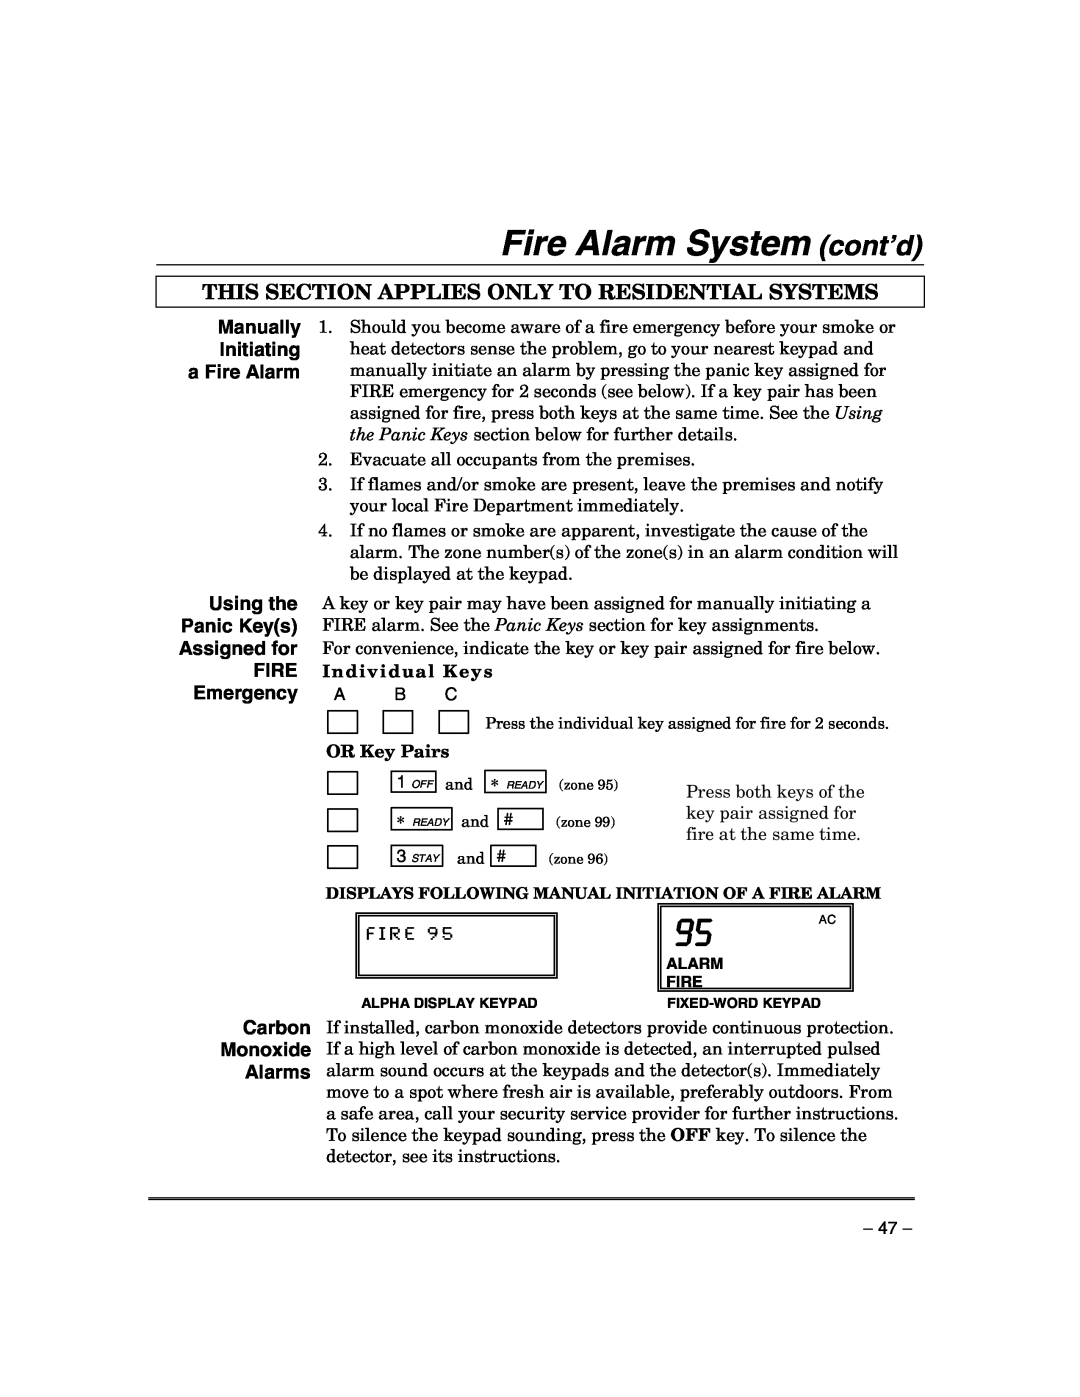 Honeywell VISTA-21IP Fire Alarm System cont’d, Manually Initiating a Fire Alarm, Carbon Monoxide Alarms, Individual Keys 